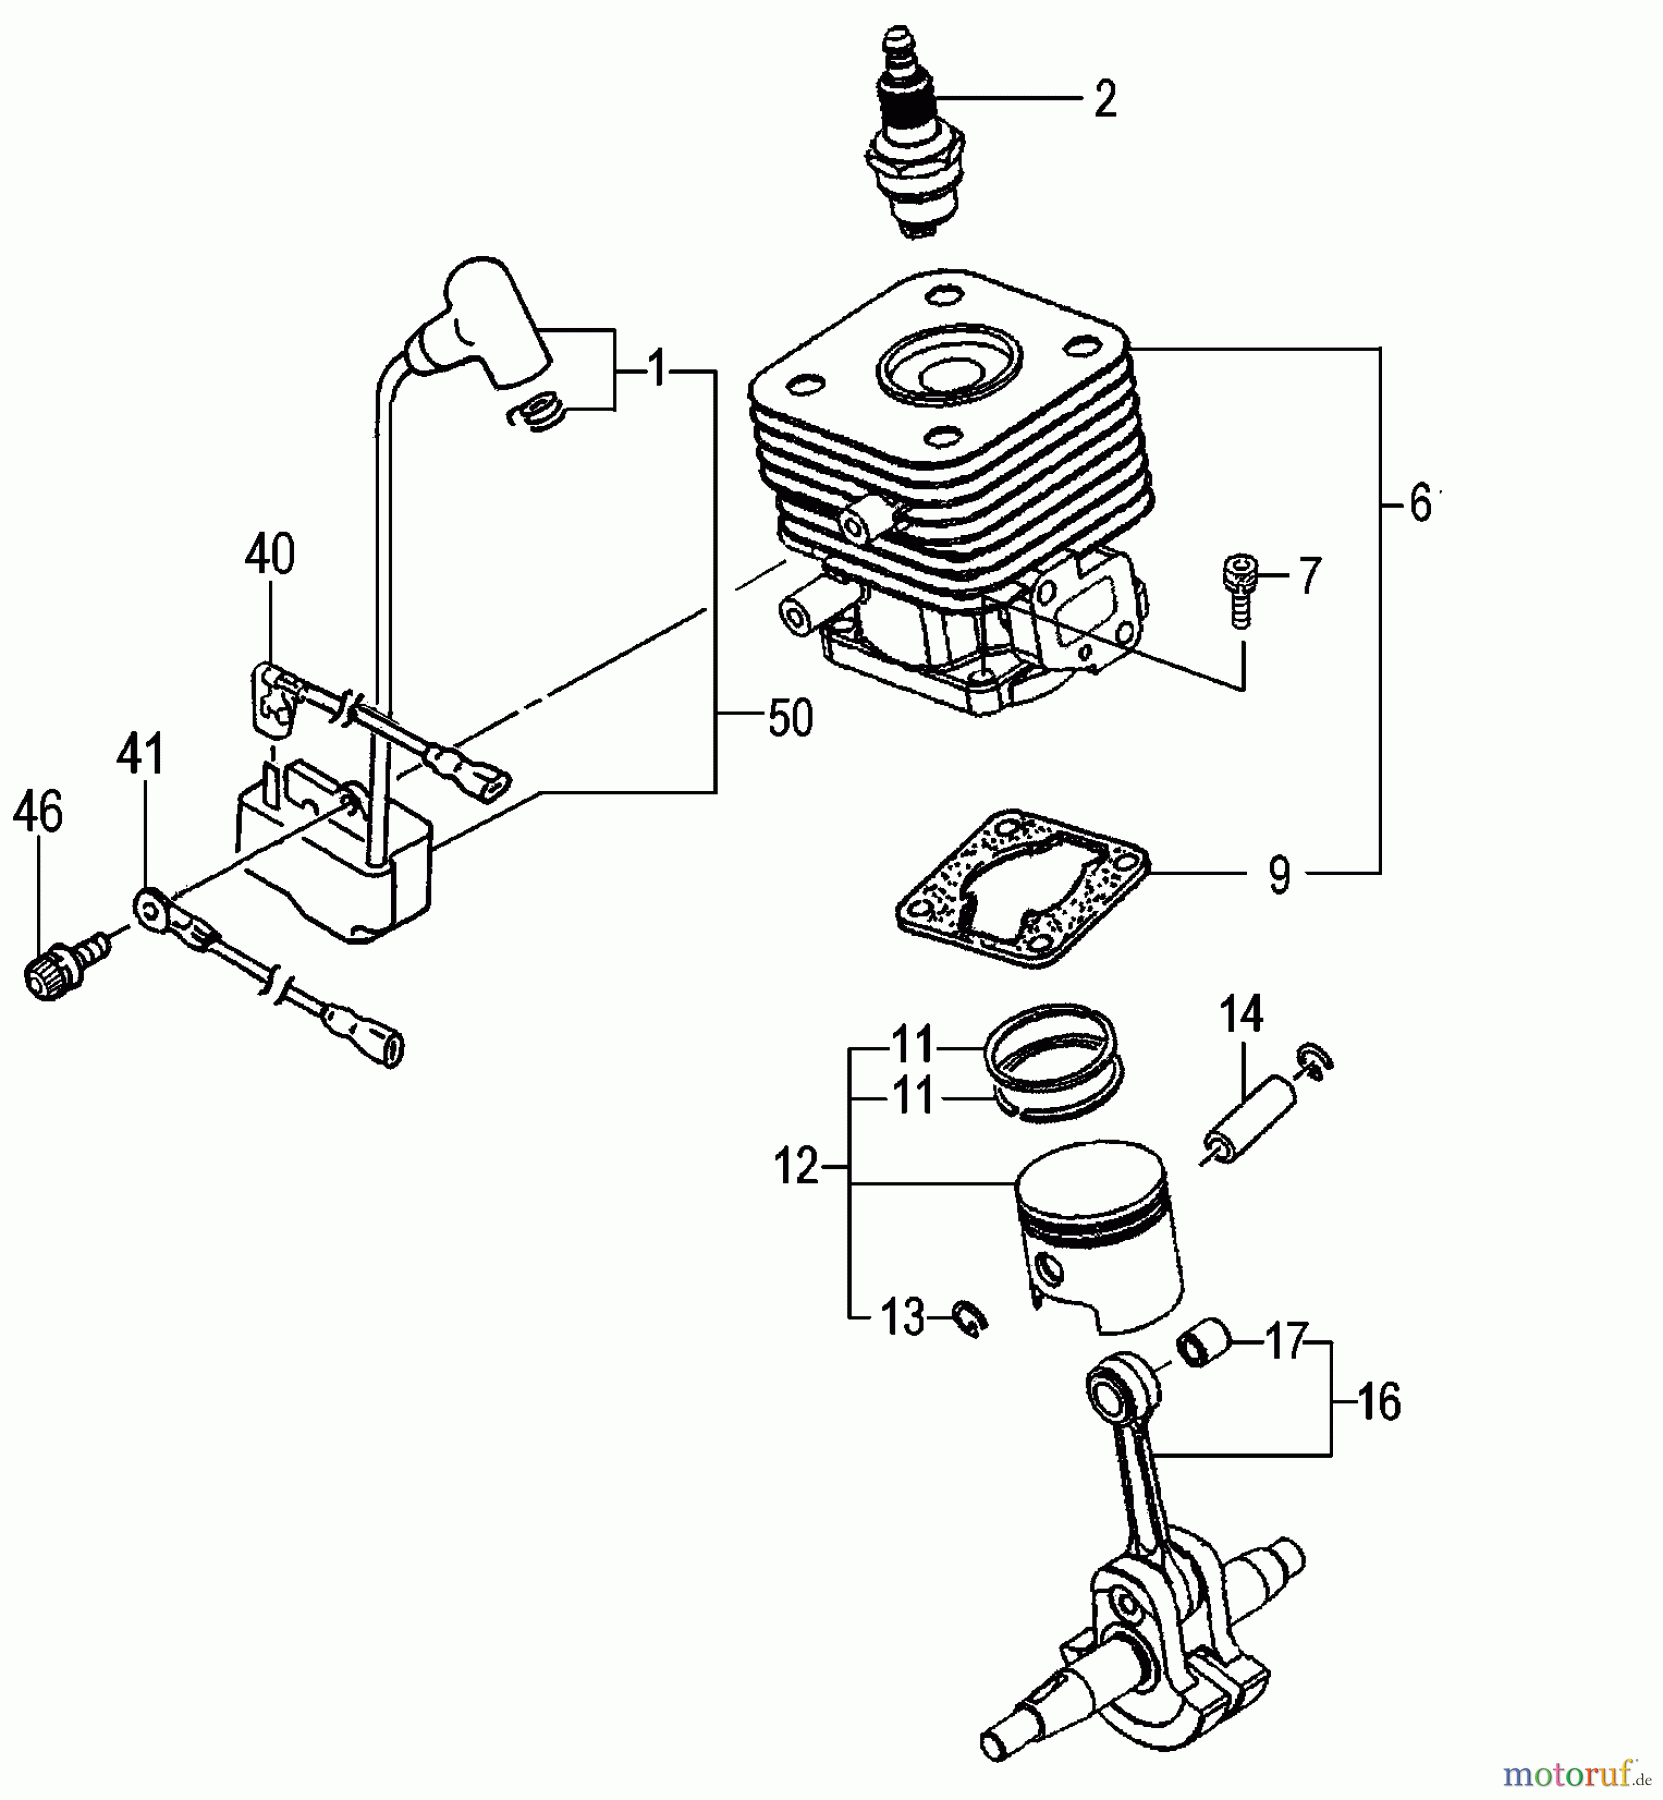  Tanaka Trimmer, Motorsensen TBC-280 - Tanaka Grass Trimmer Cylinder, Piston, Crankshaft, Ignition